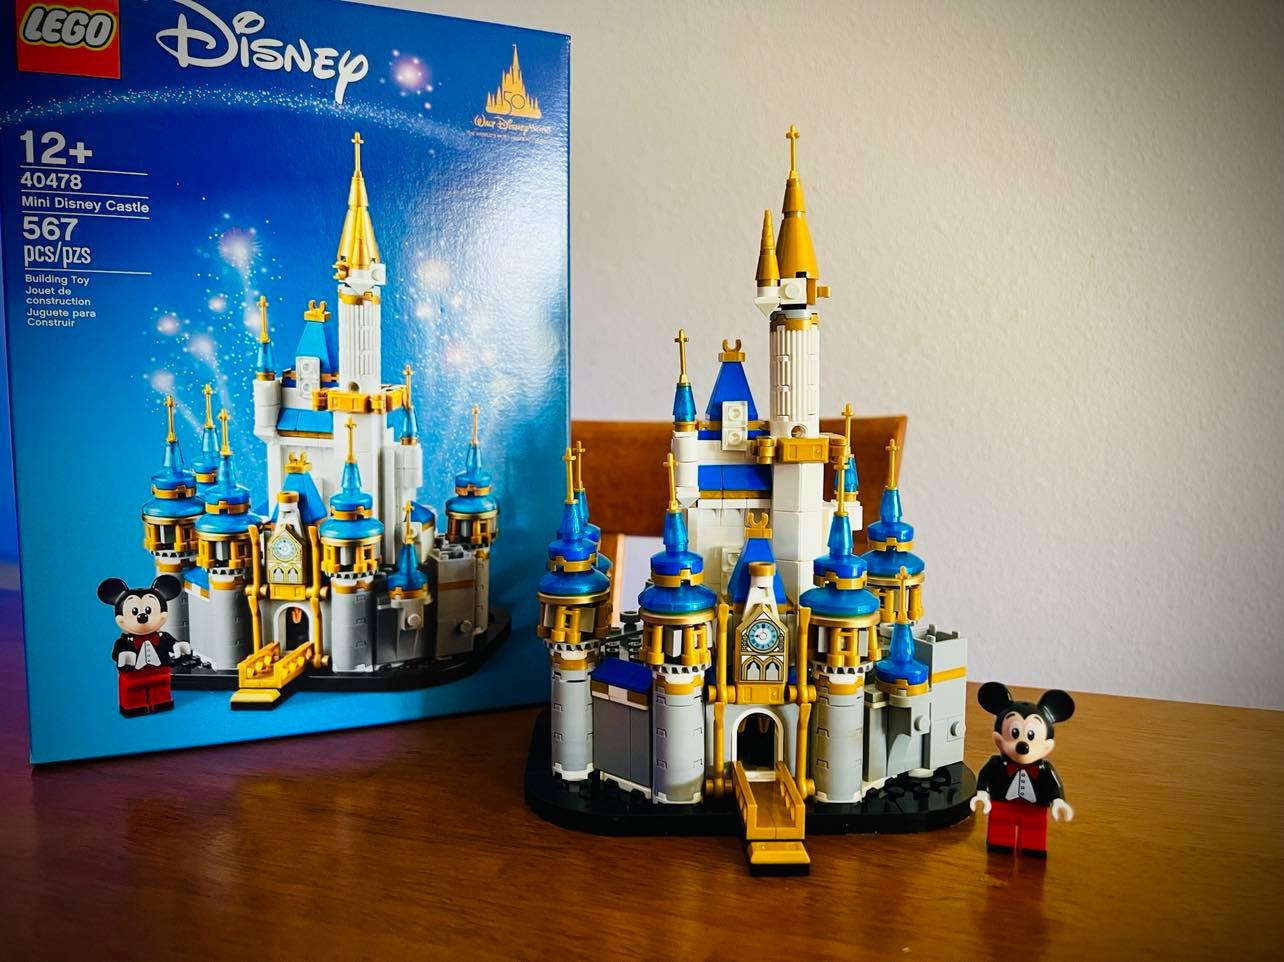 revolution matrix affjedring Celebrate Walt Disney World's 50th anniversary with this all-new LEGO set